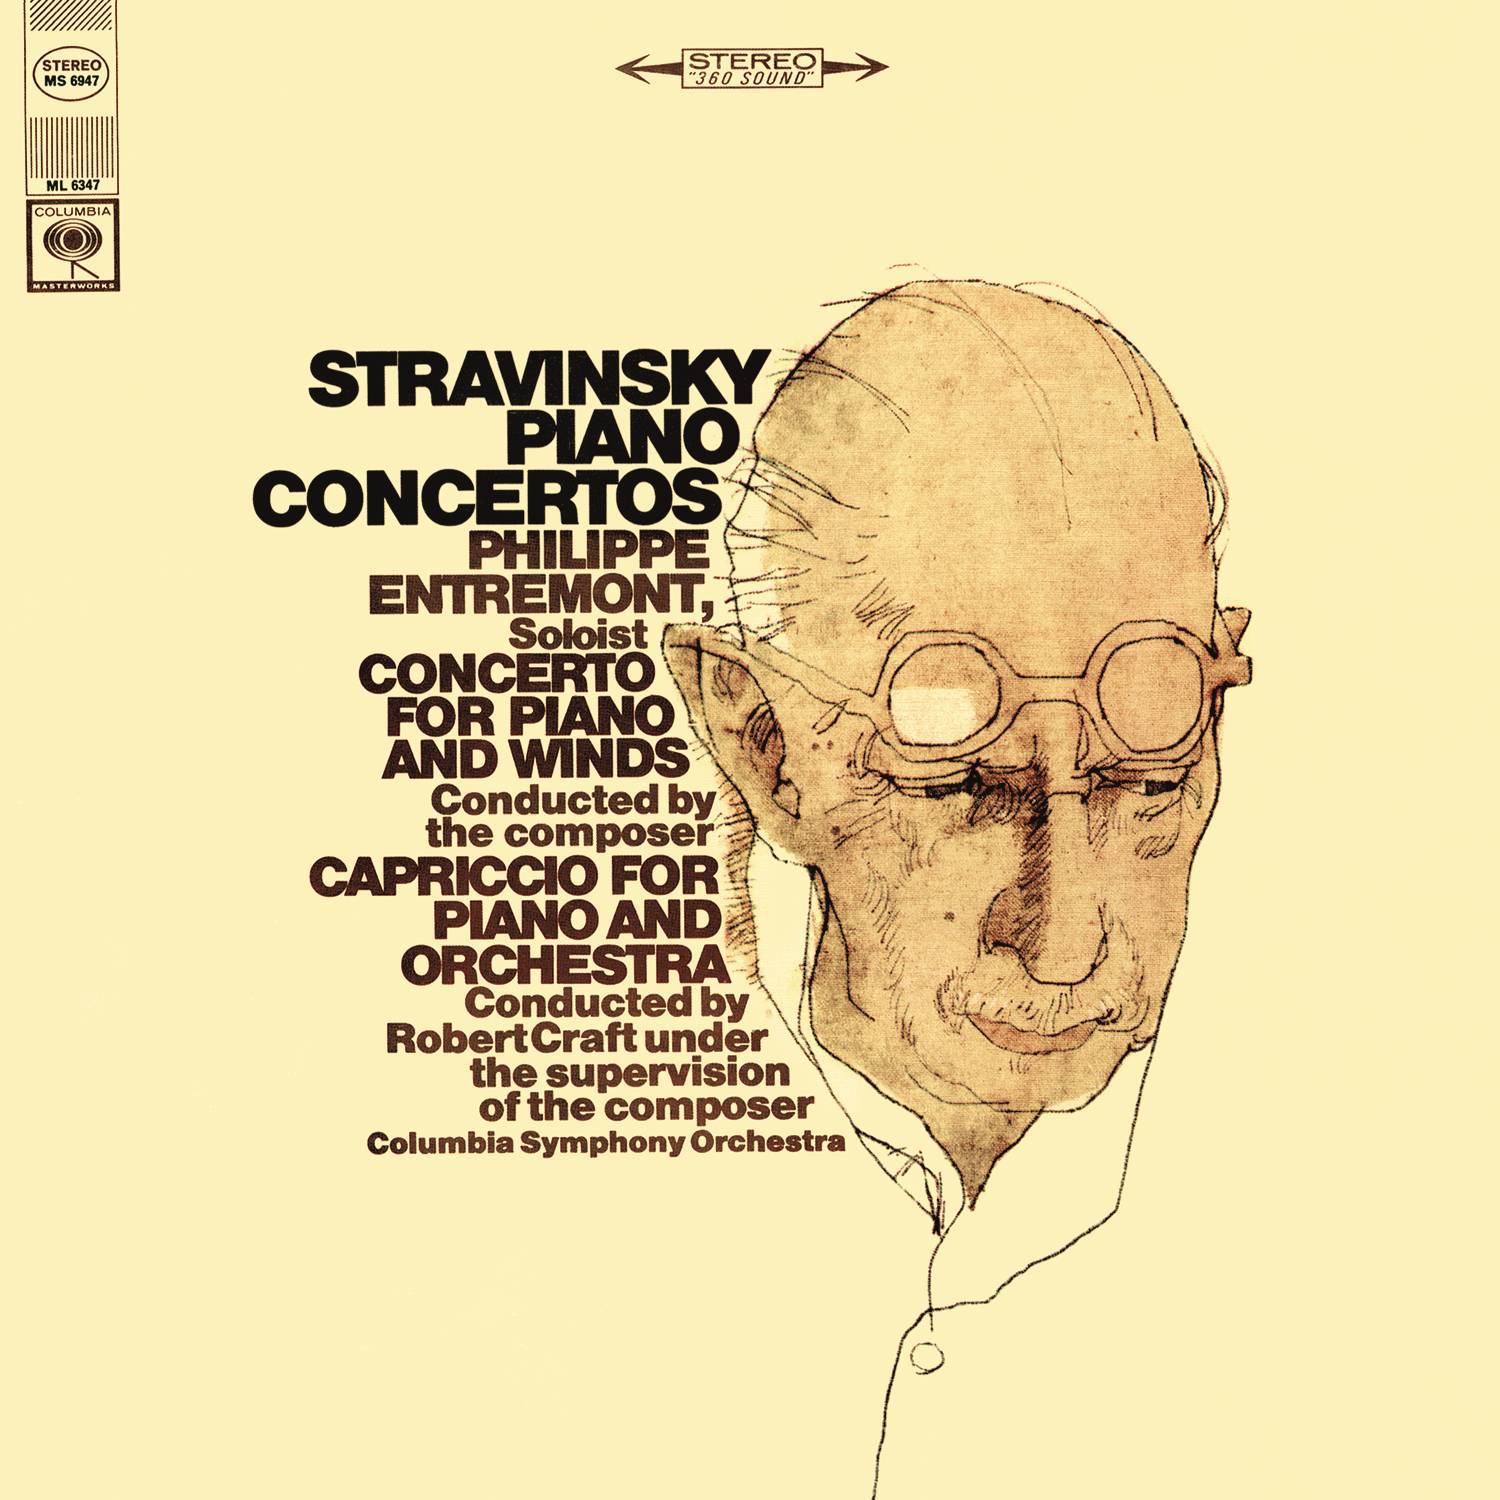 Stravinsky: Capriccio for Piano and Orchestra & Concerto for Piano and Wind Instruments